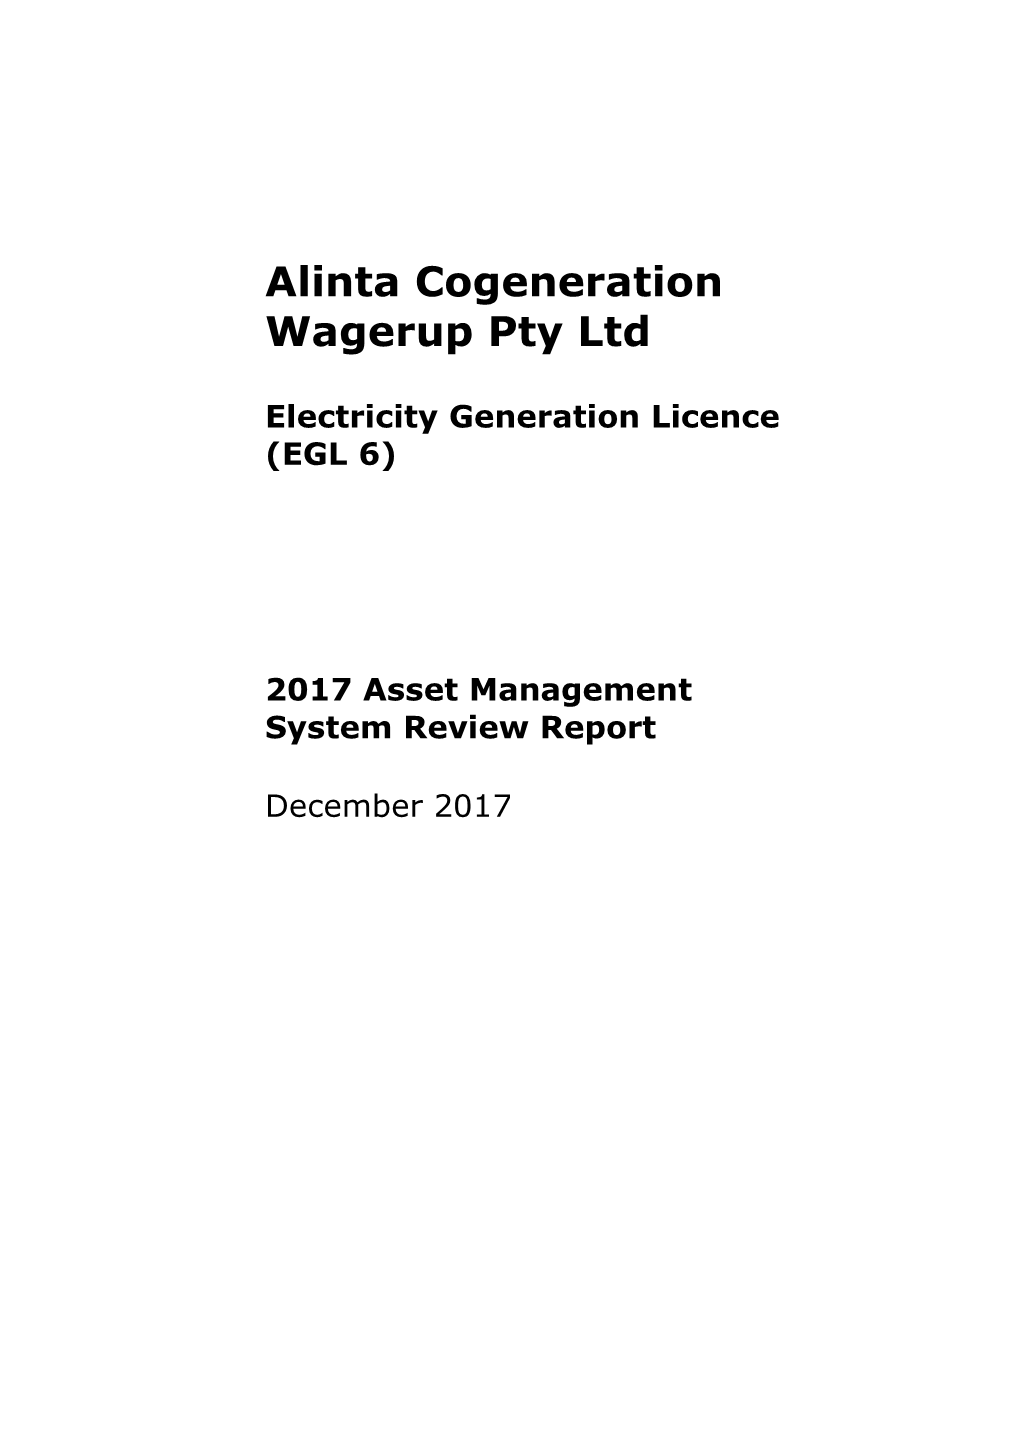 Alinta Cogeneration Wagerup Pty Ltd